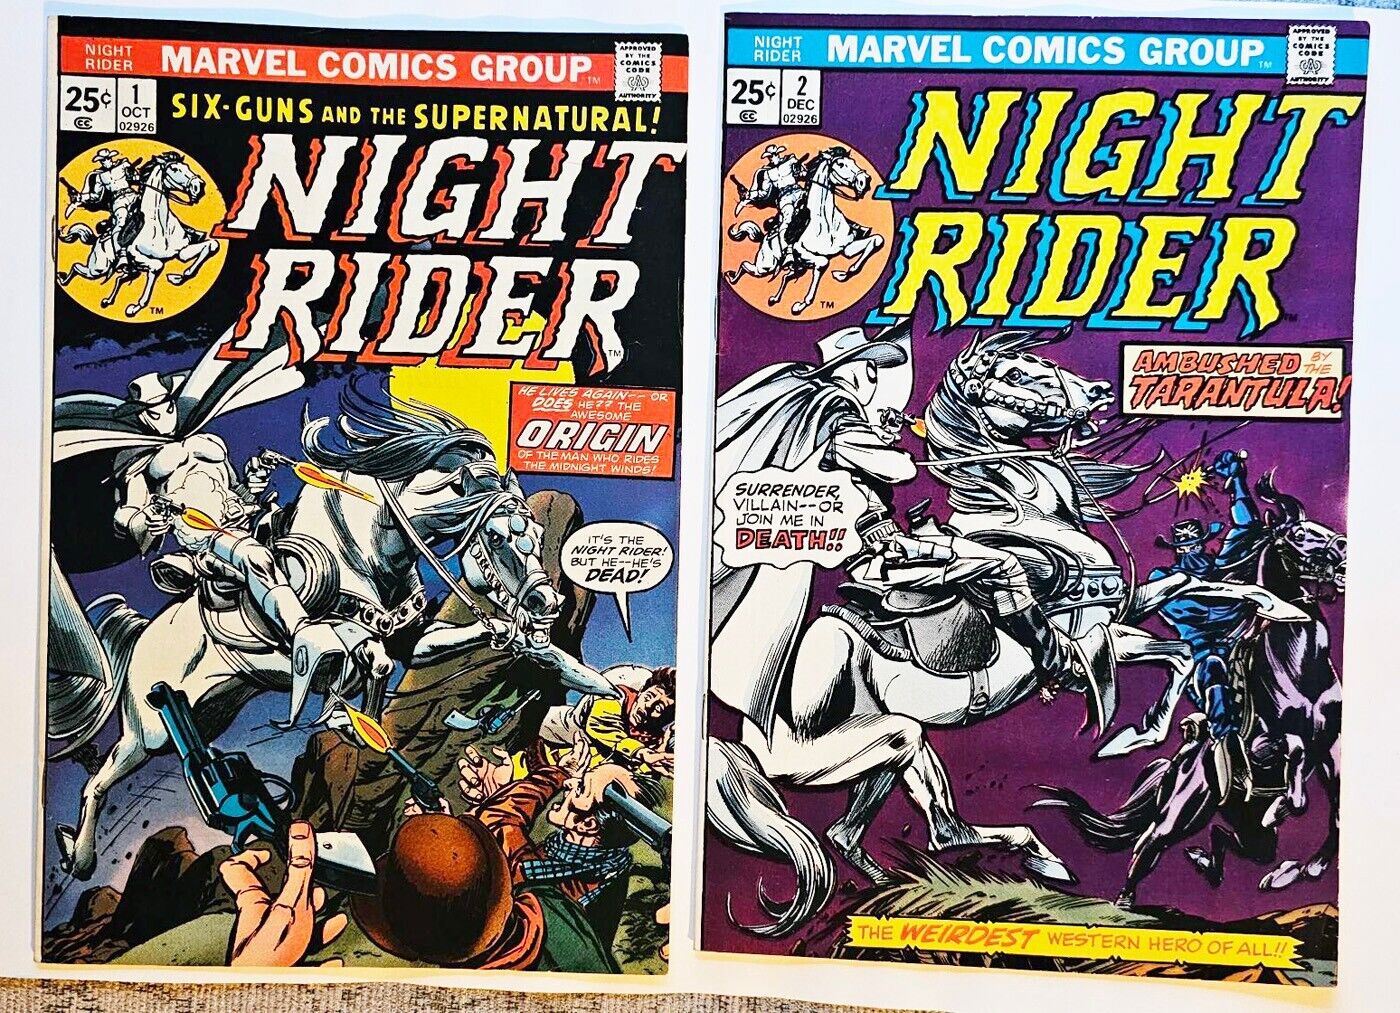 Night Rider #1 #2 Western Ghost Rider F/VF $2 ship USPS 1st class CONUS